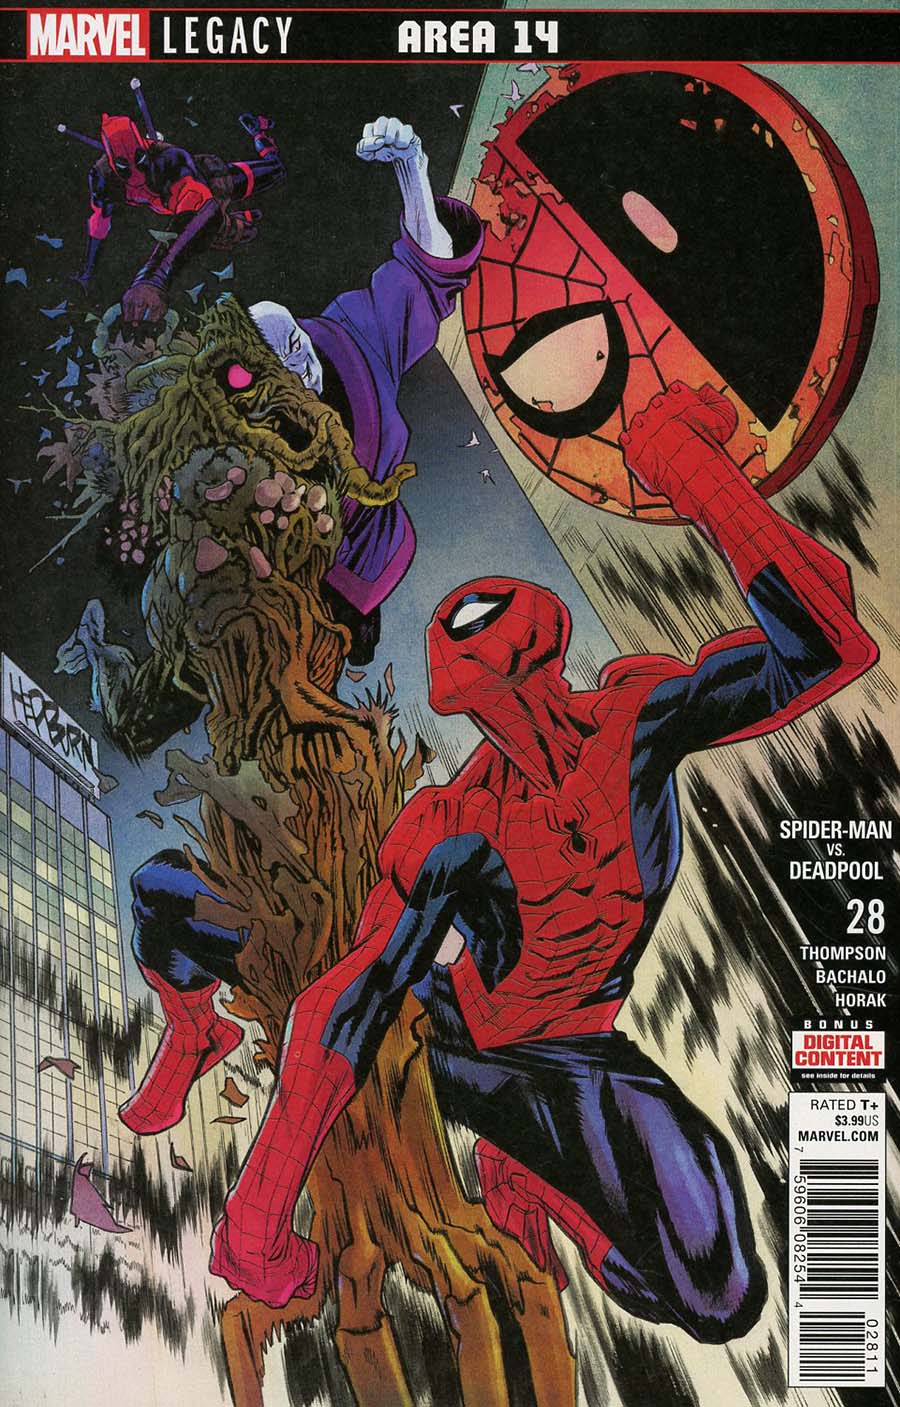 Spider-Man Deadpool #28 (Marvel Legacy Tie-In)